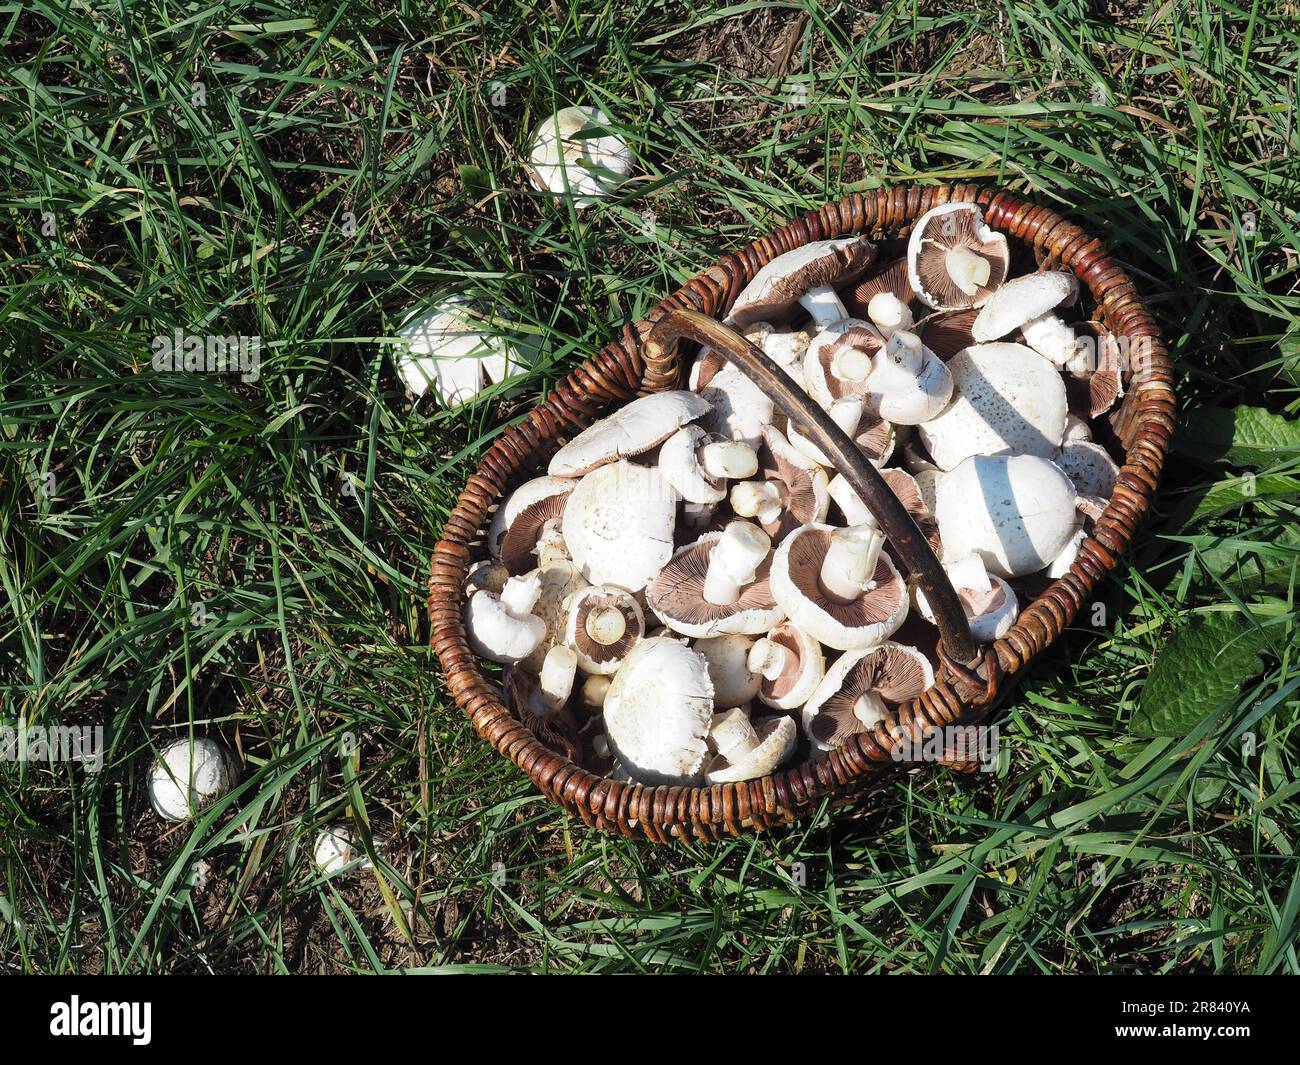 Mushroom basket with meadow mushrooms, mushroom of the year 2018 Stock Photo